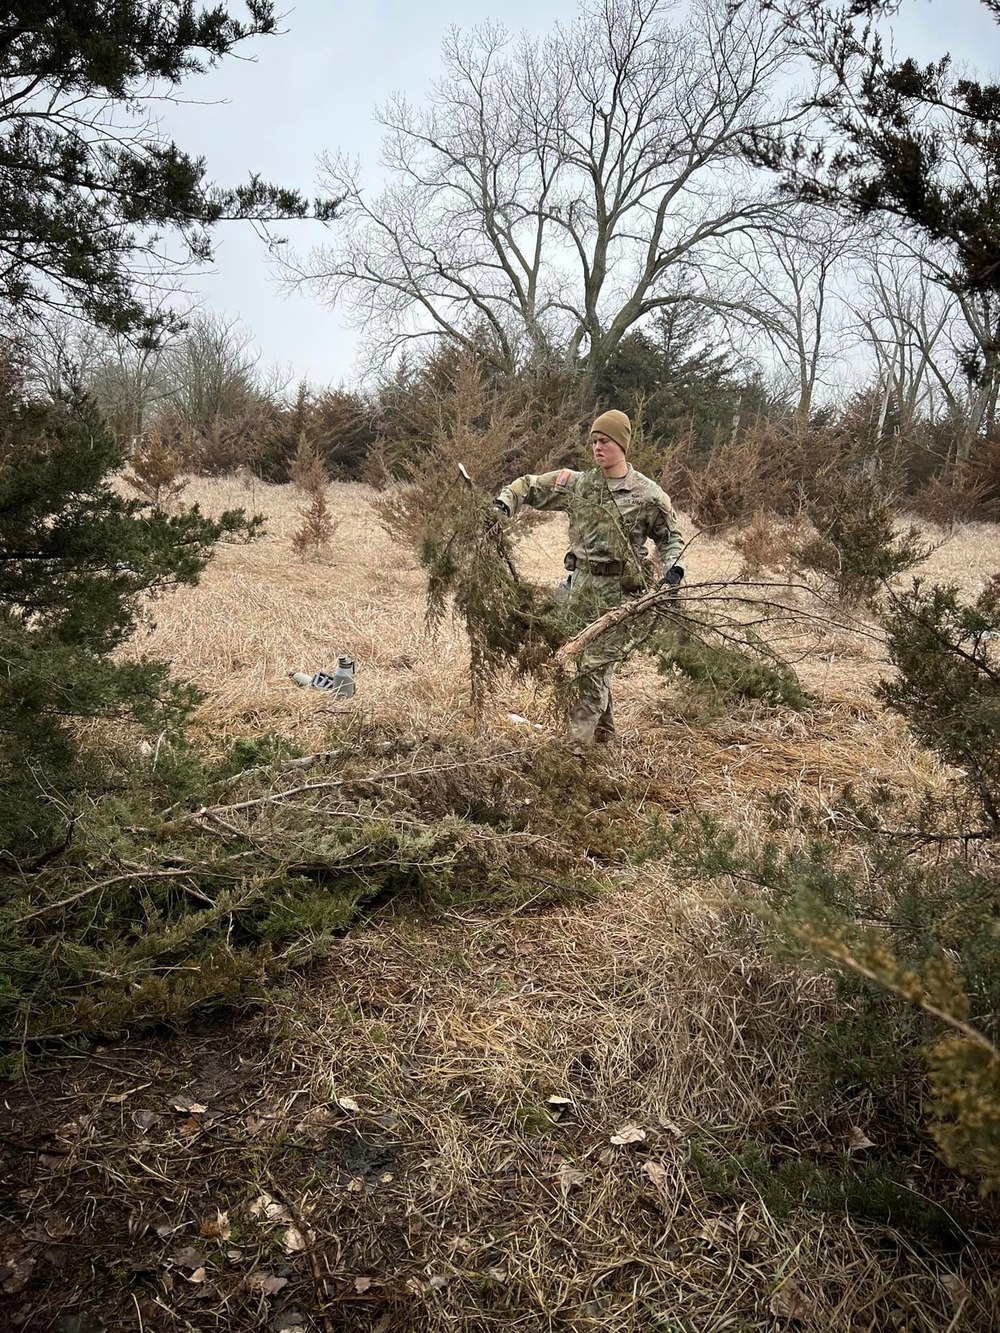 Nebraska Infantry receives survival training from Air Force SERE instructors